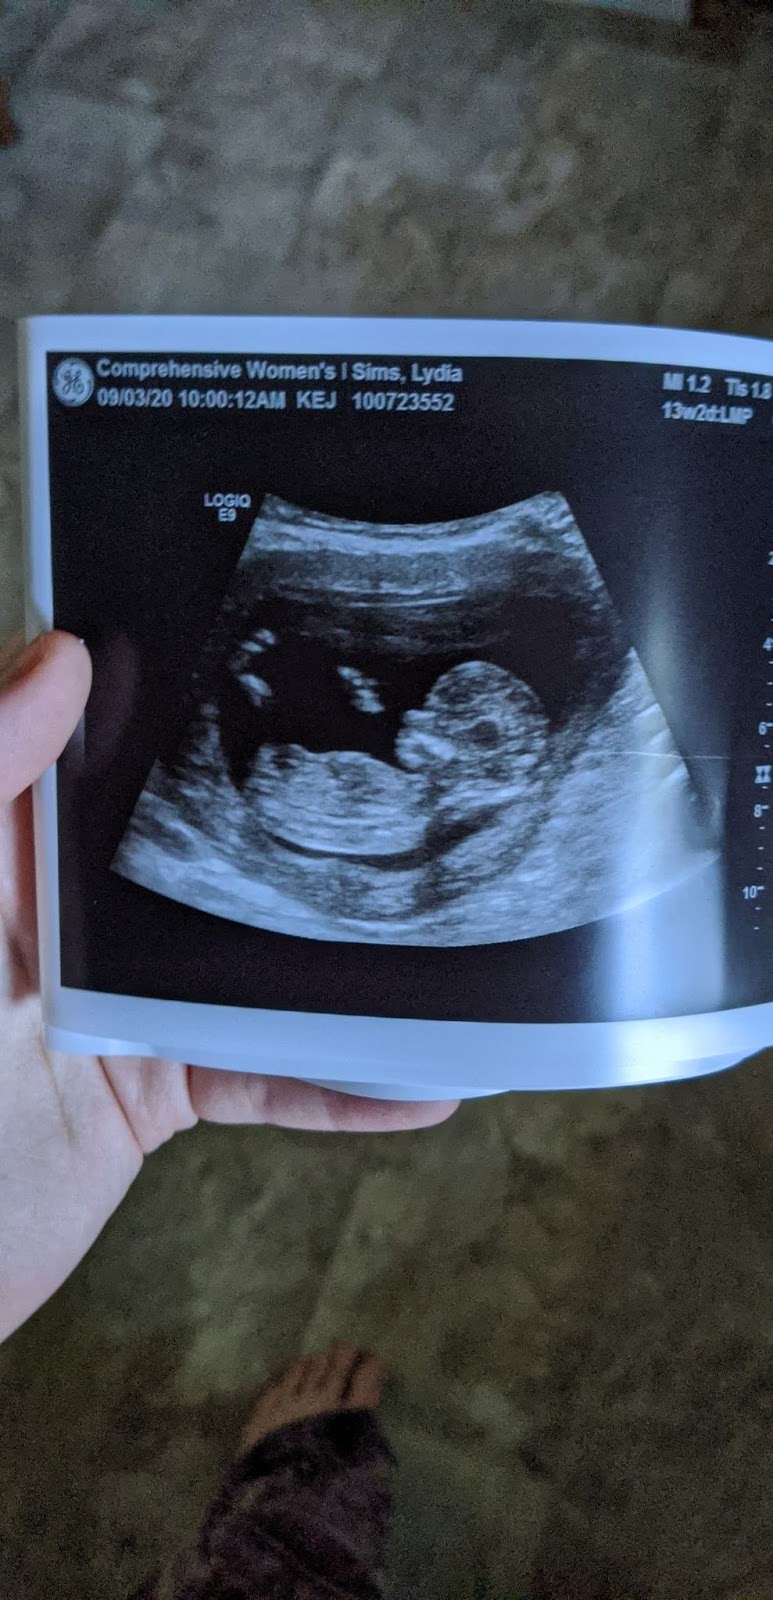 my first ultrasound